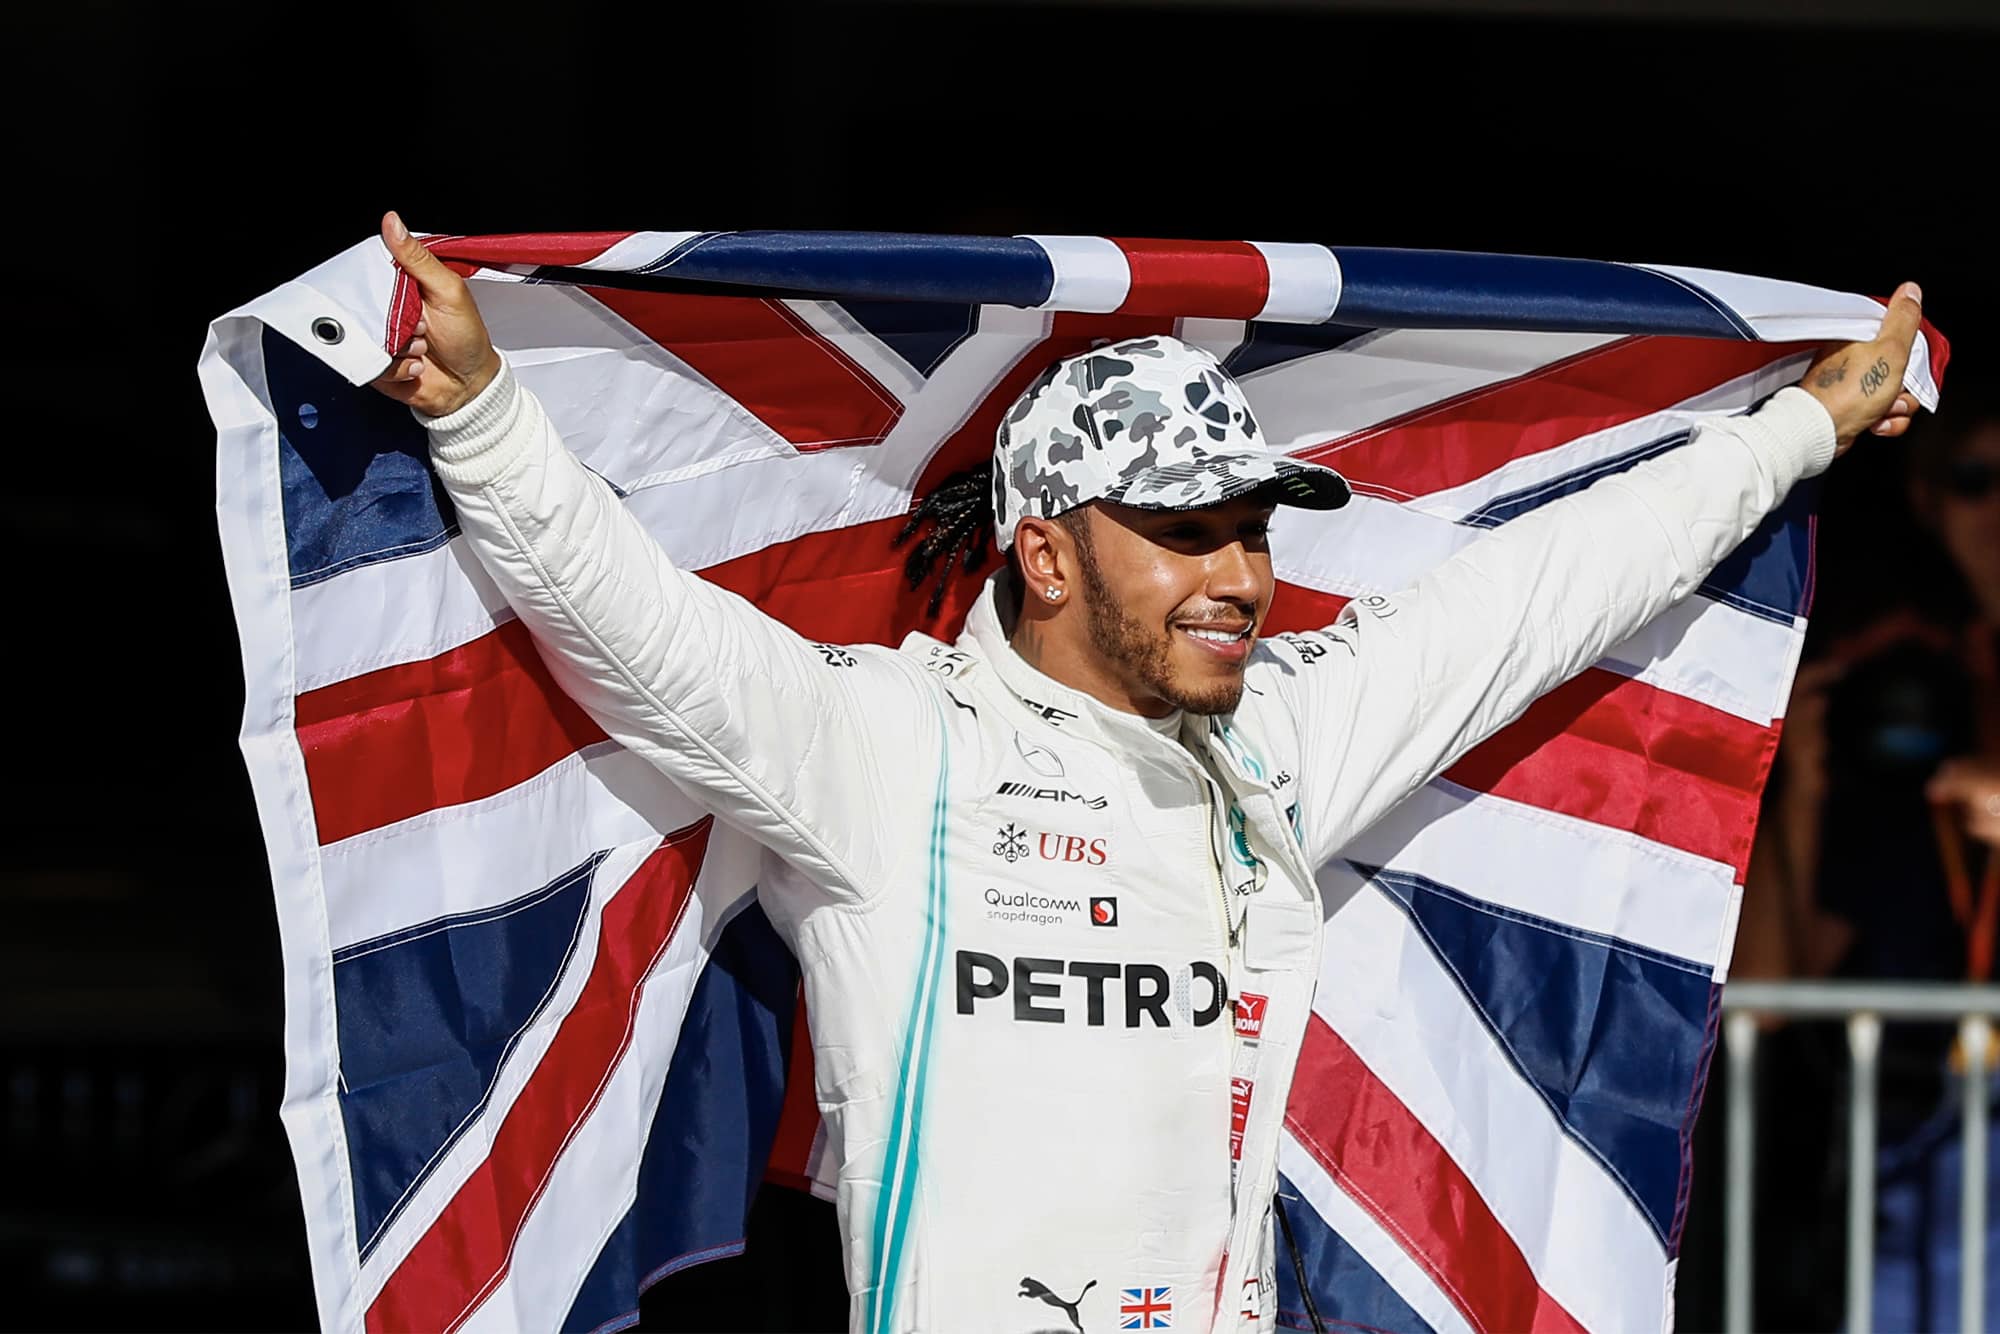 Lewis Hamilton celebrates winning his sixth drivers' championship title